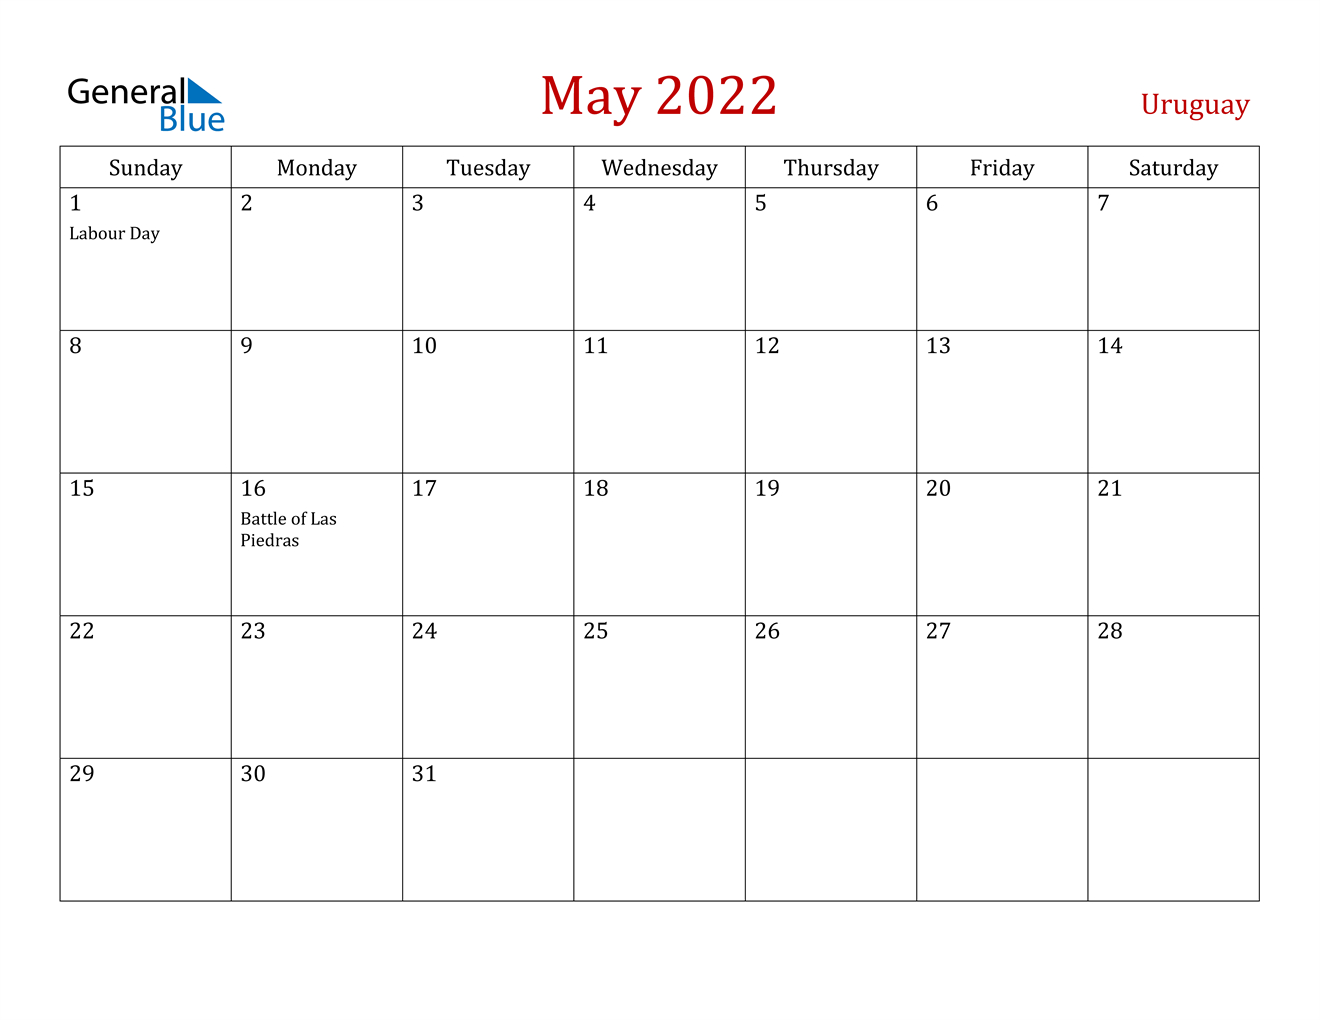 May 2022 Calendar - Uruguay